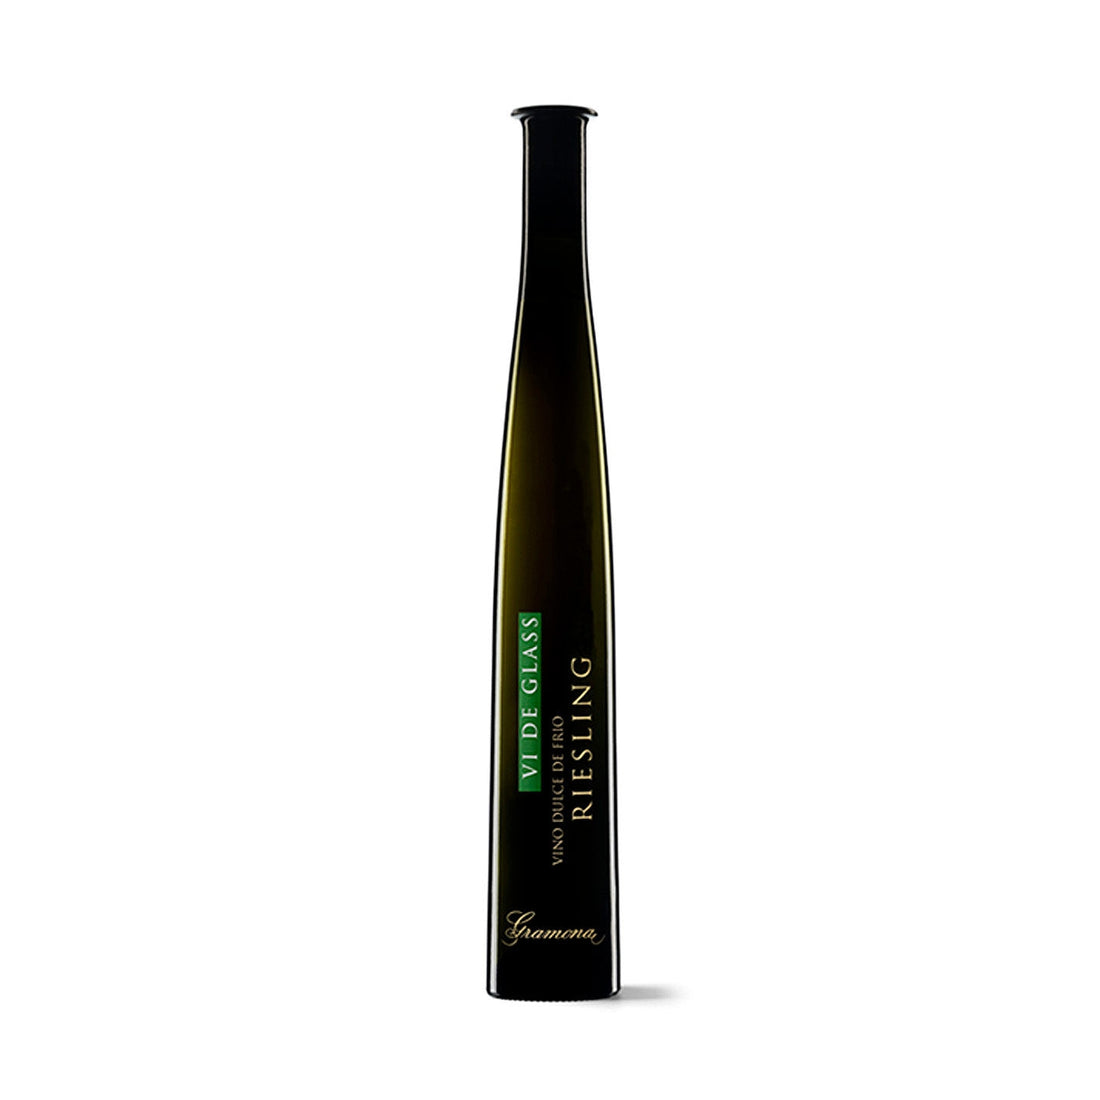 Gramona Vi De Glass Riesling 2020 (Half Bottle)